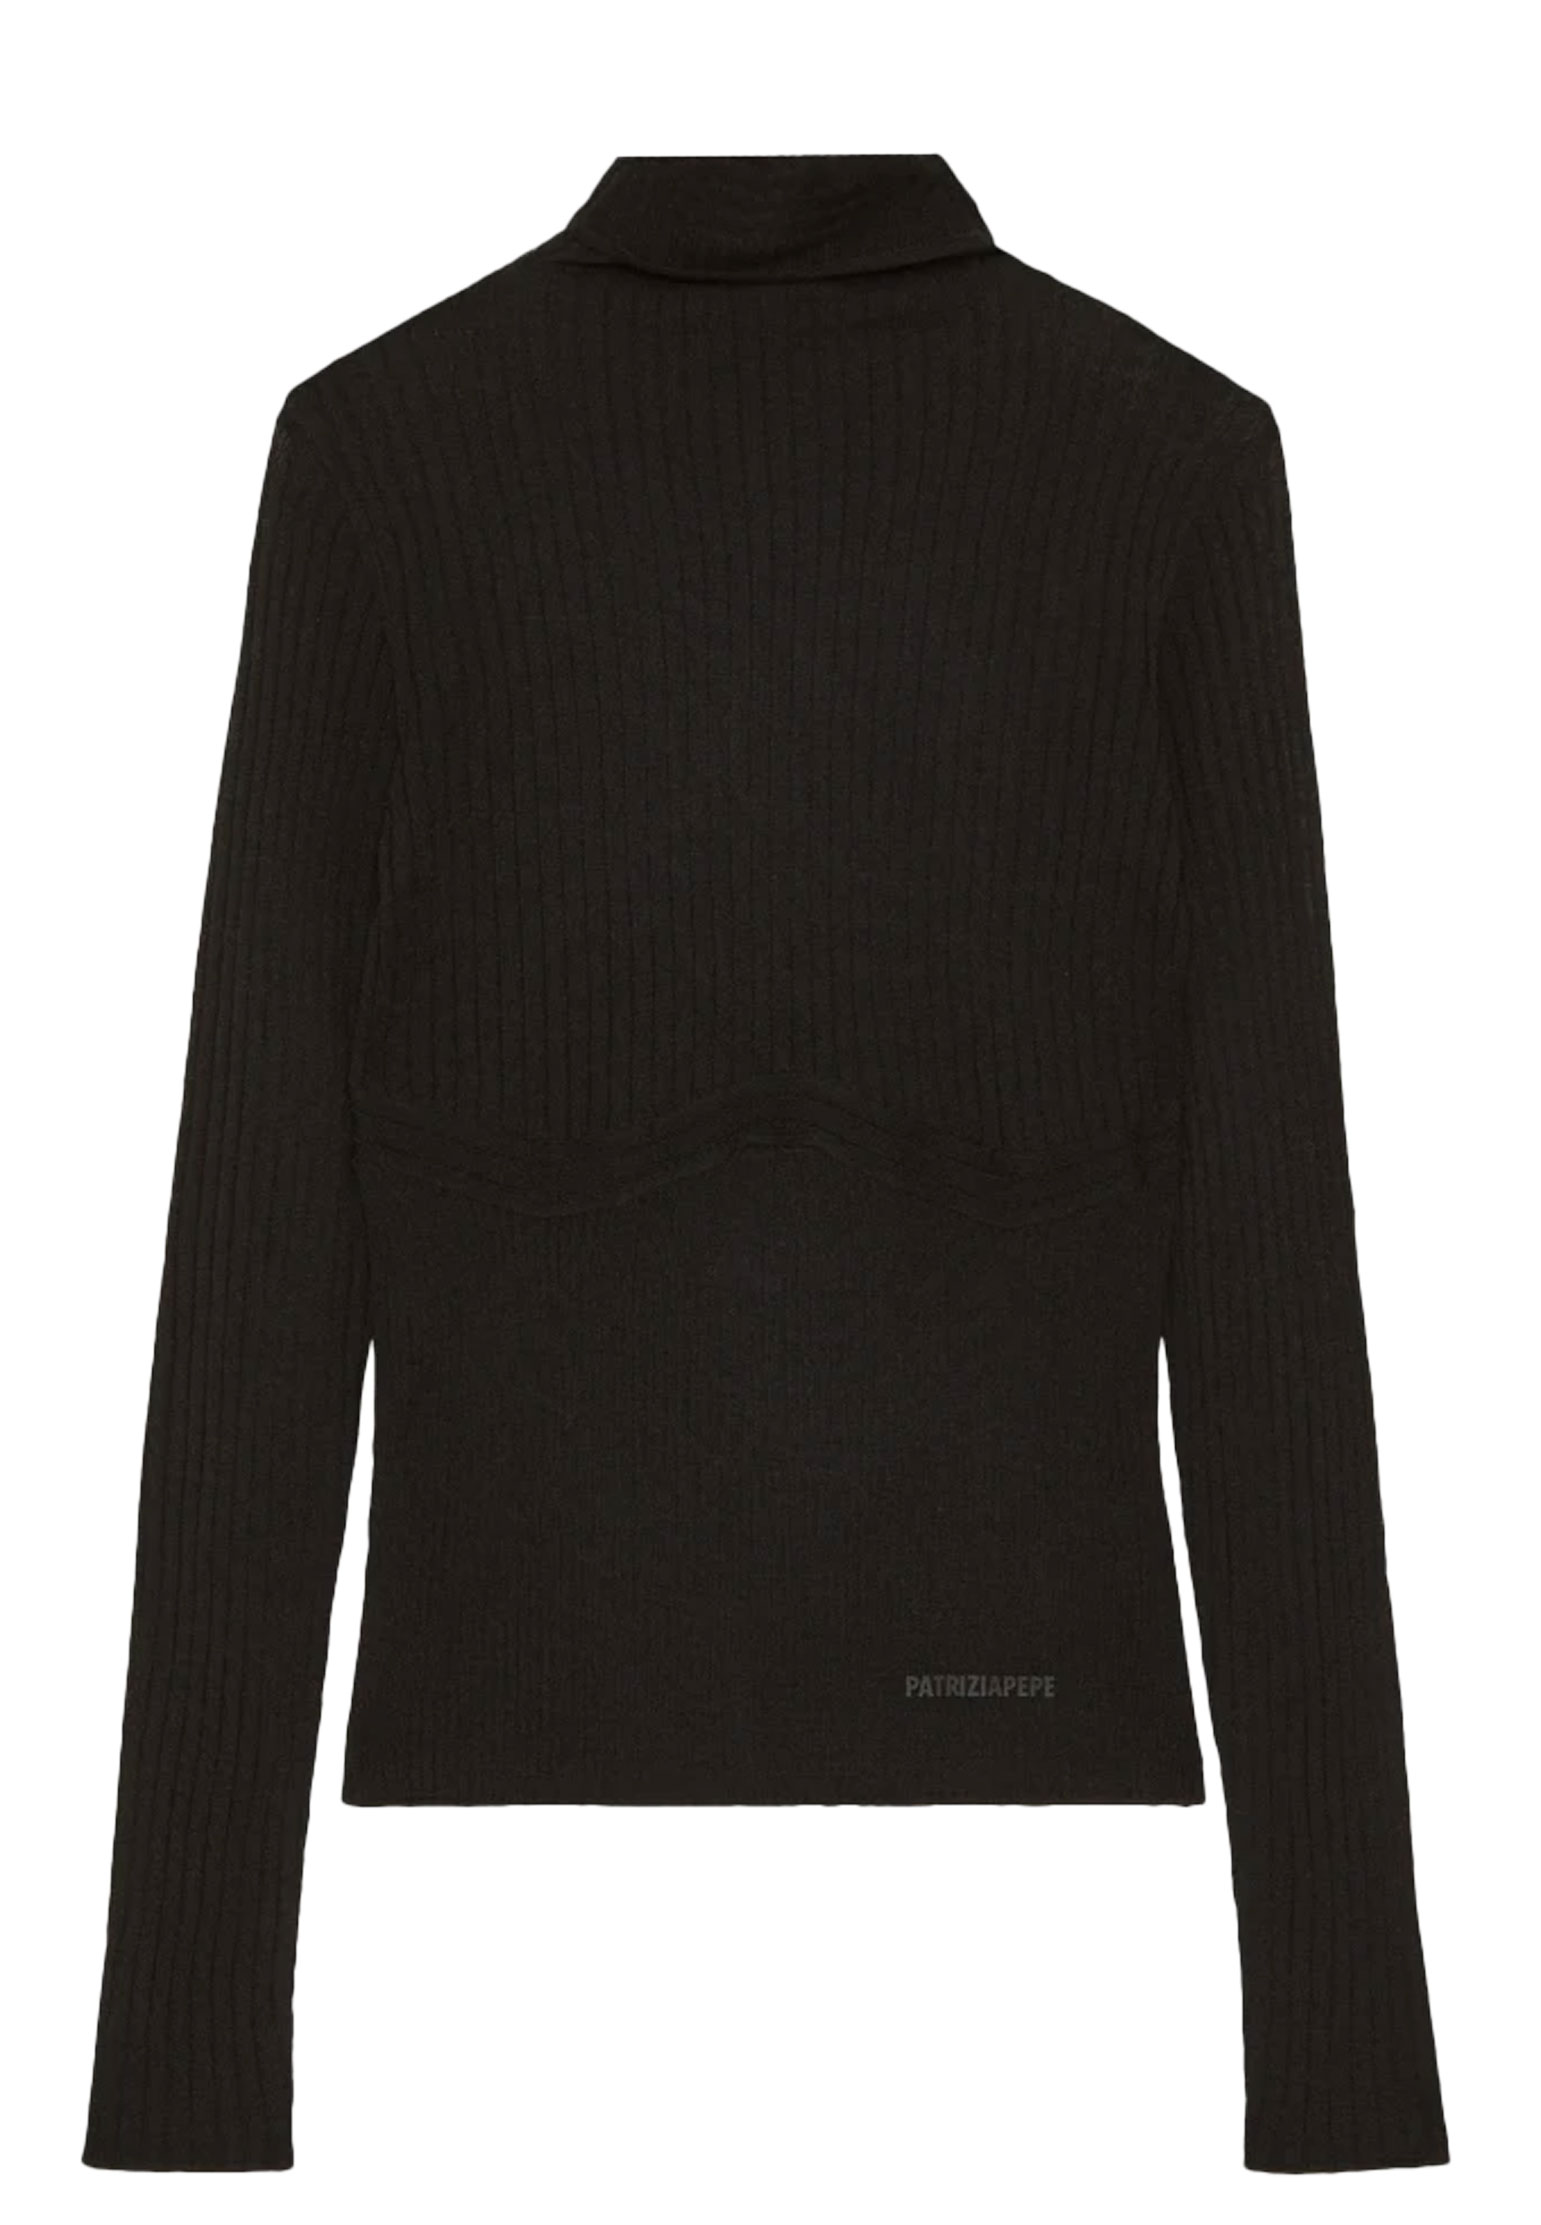 Пуловер PATRIZIA PEPE Черный, размер 2